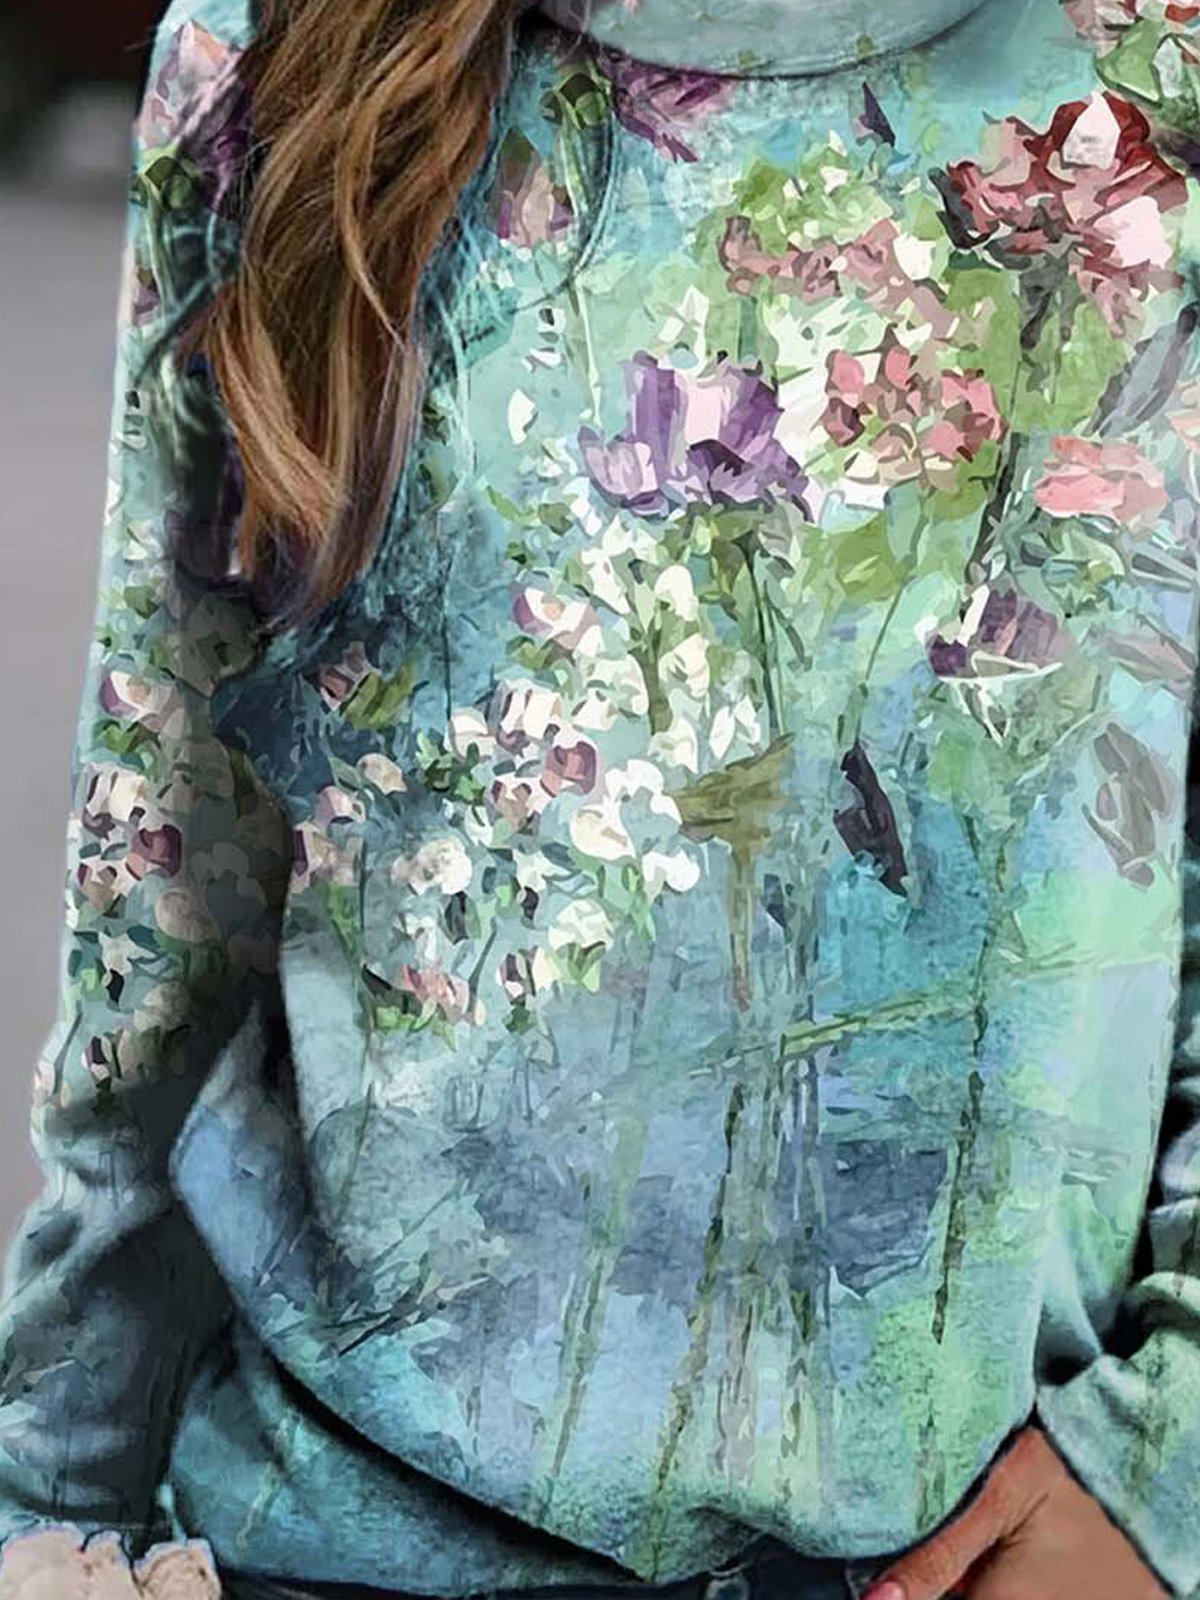 Casual Art Floral Long Sleeve Sweatshirt